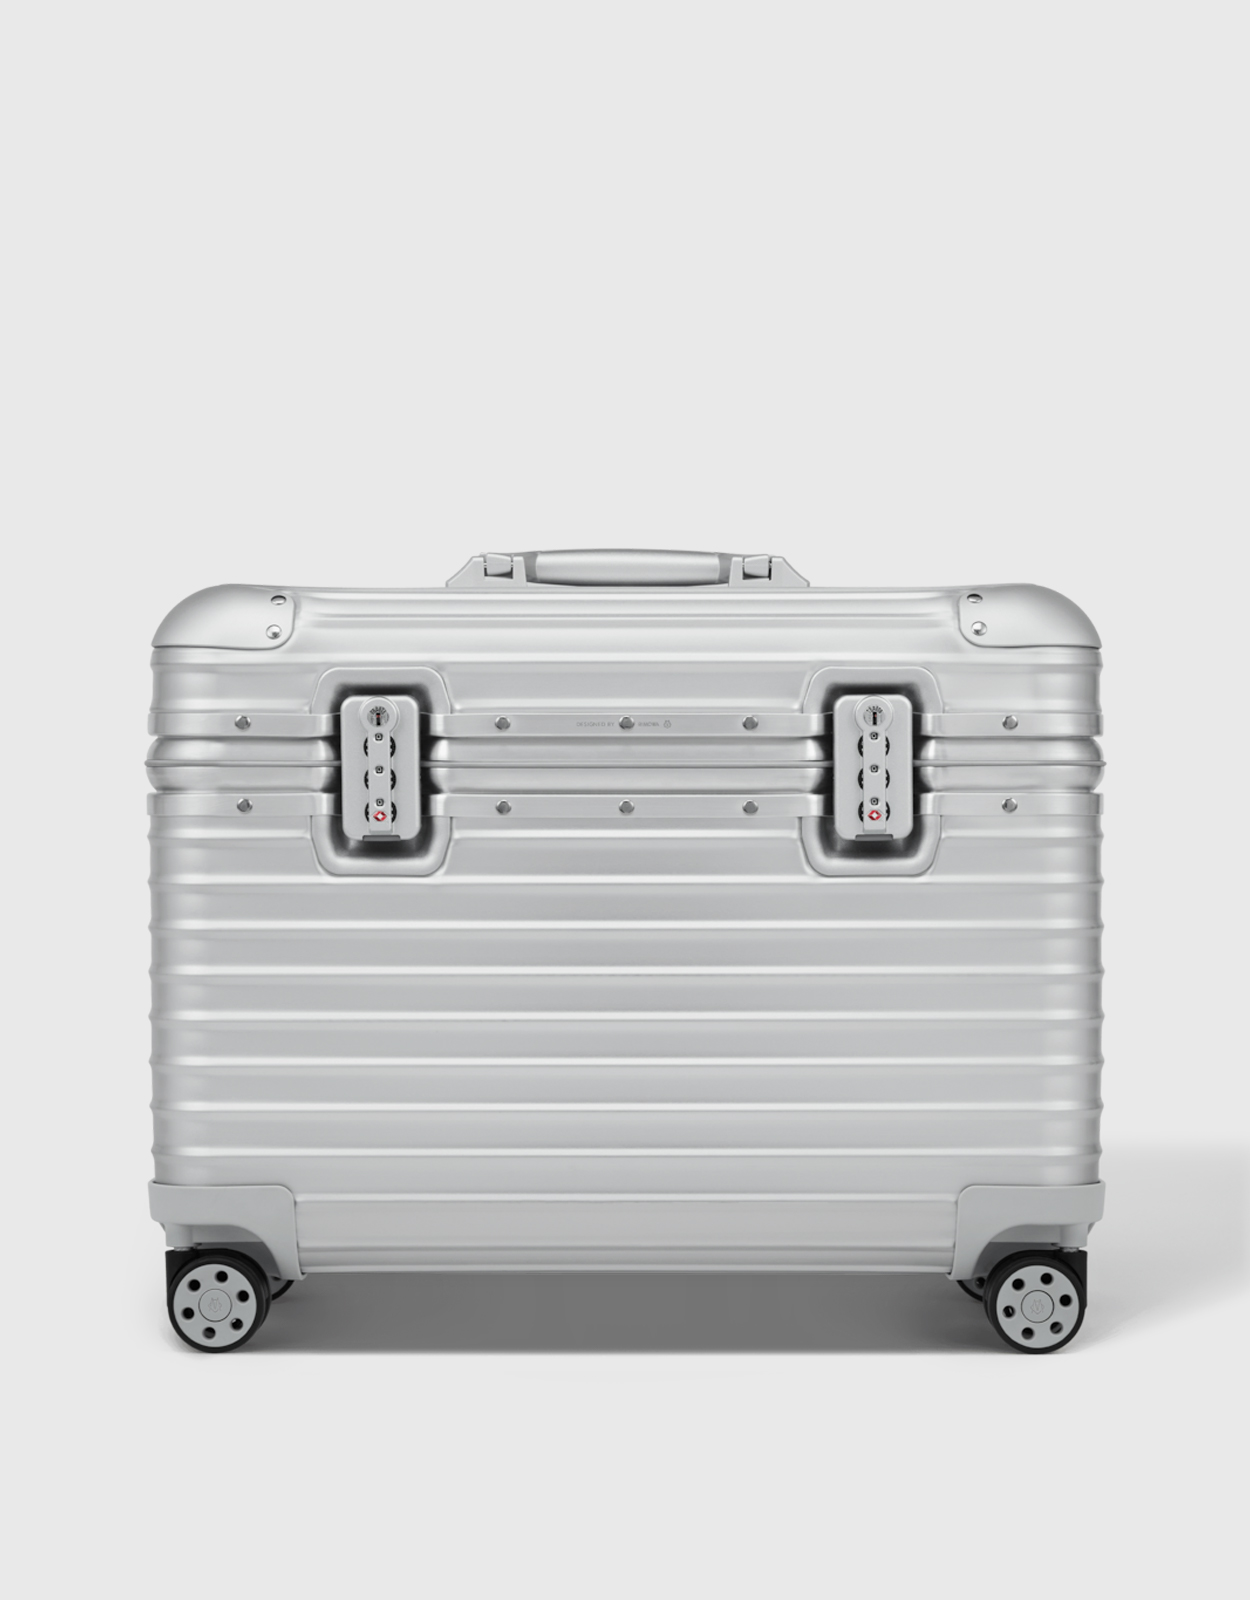 Rimowa Rimowa Original Cabin Plus 22 Luggage-Titanium (Luggage,16-22  Cabin)